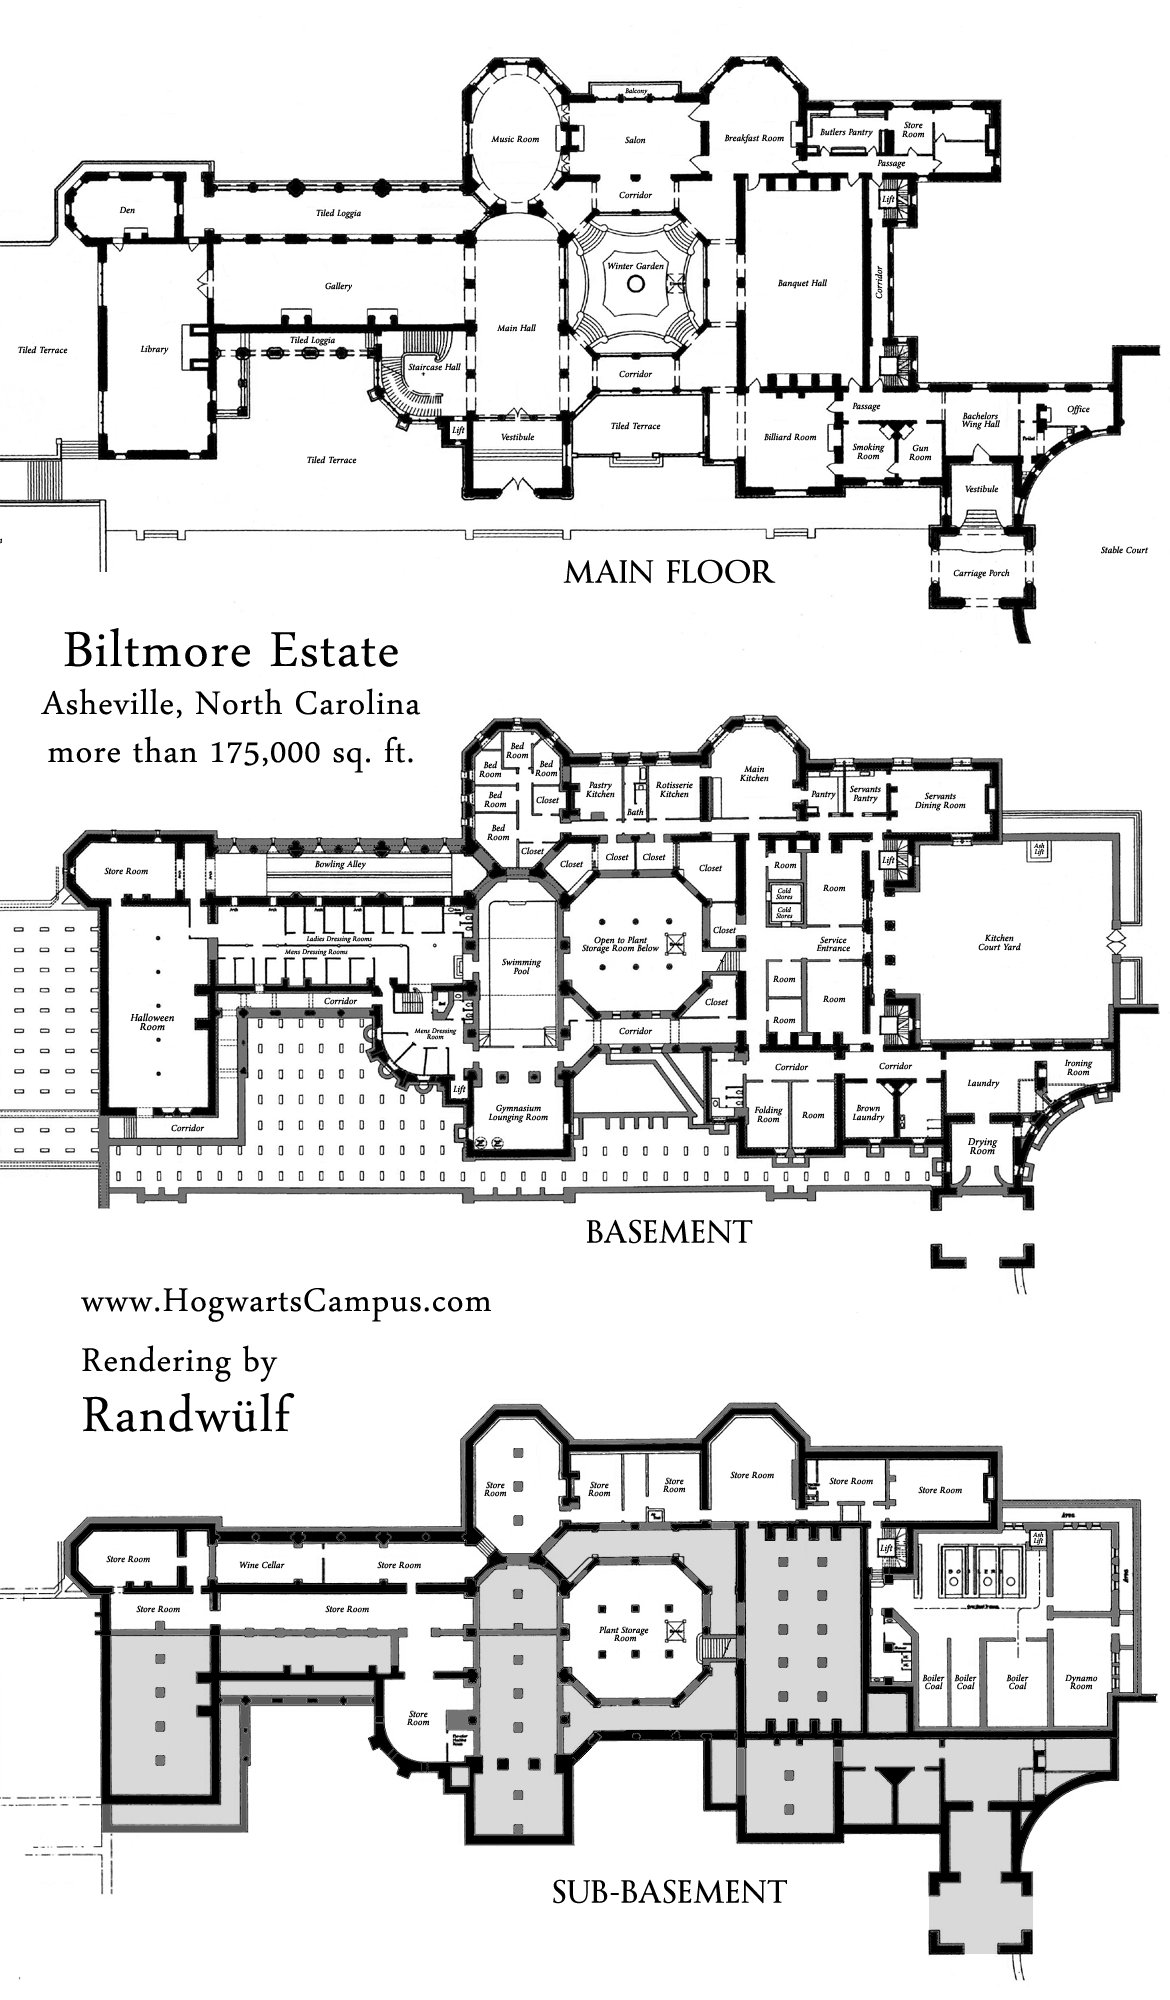 Biltmore Estate Floor Plan